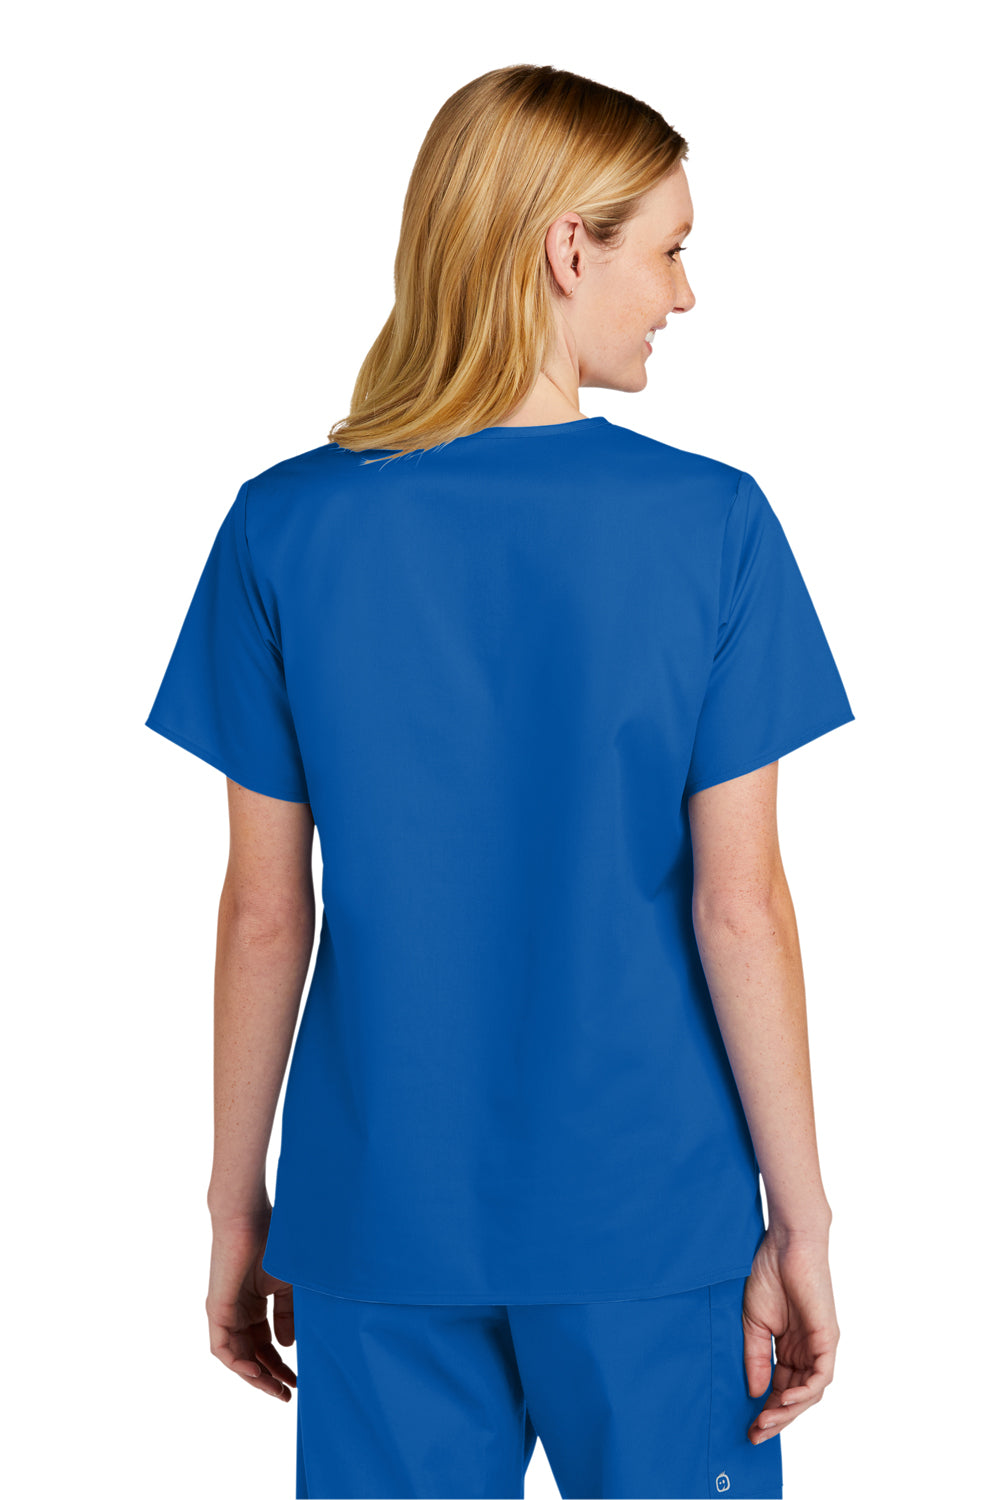 Wonderwink WW4560 WorkFlex Short Sleeve V-Neck Shirt Royal Blue Back